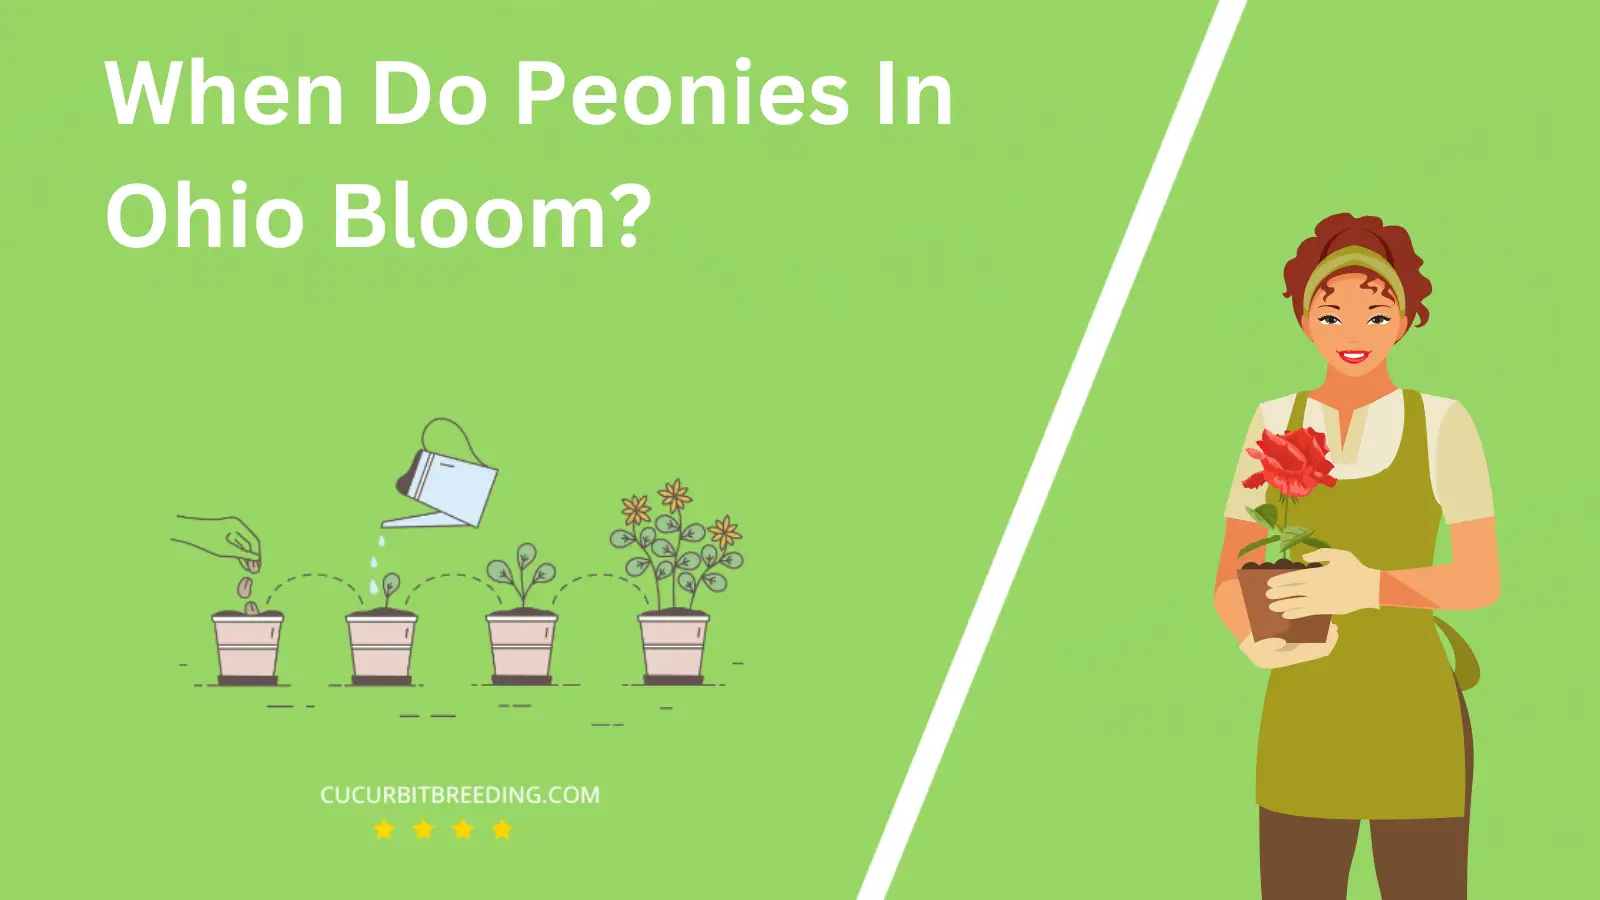 When Do Peonies In Ohio Bloom?